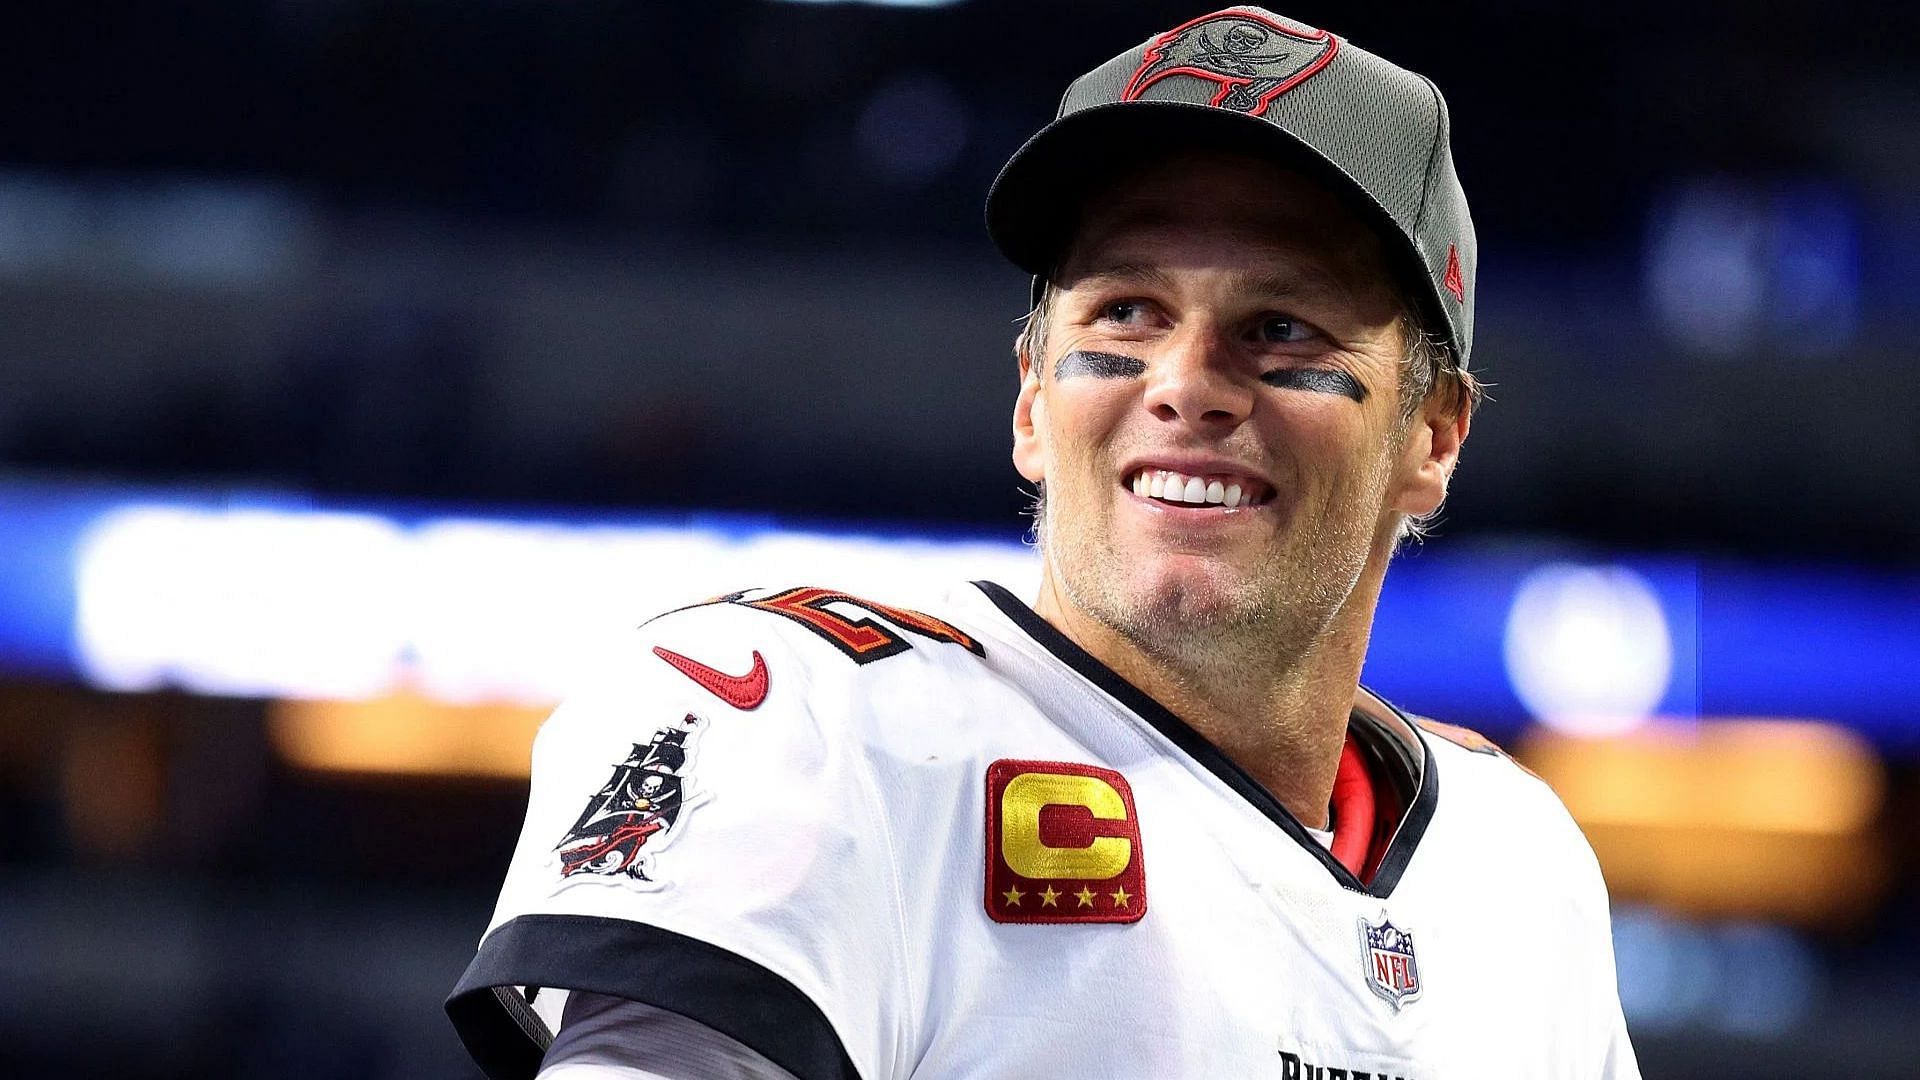 Former NFL quarterback Tom Brady will be joining FOX Sports